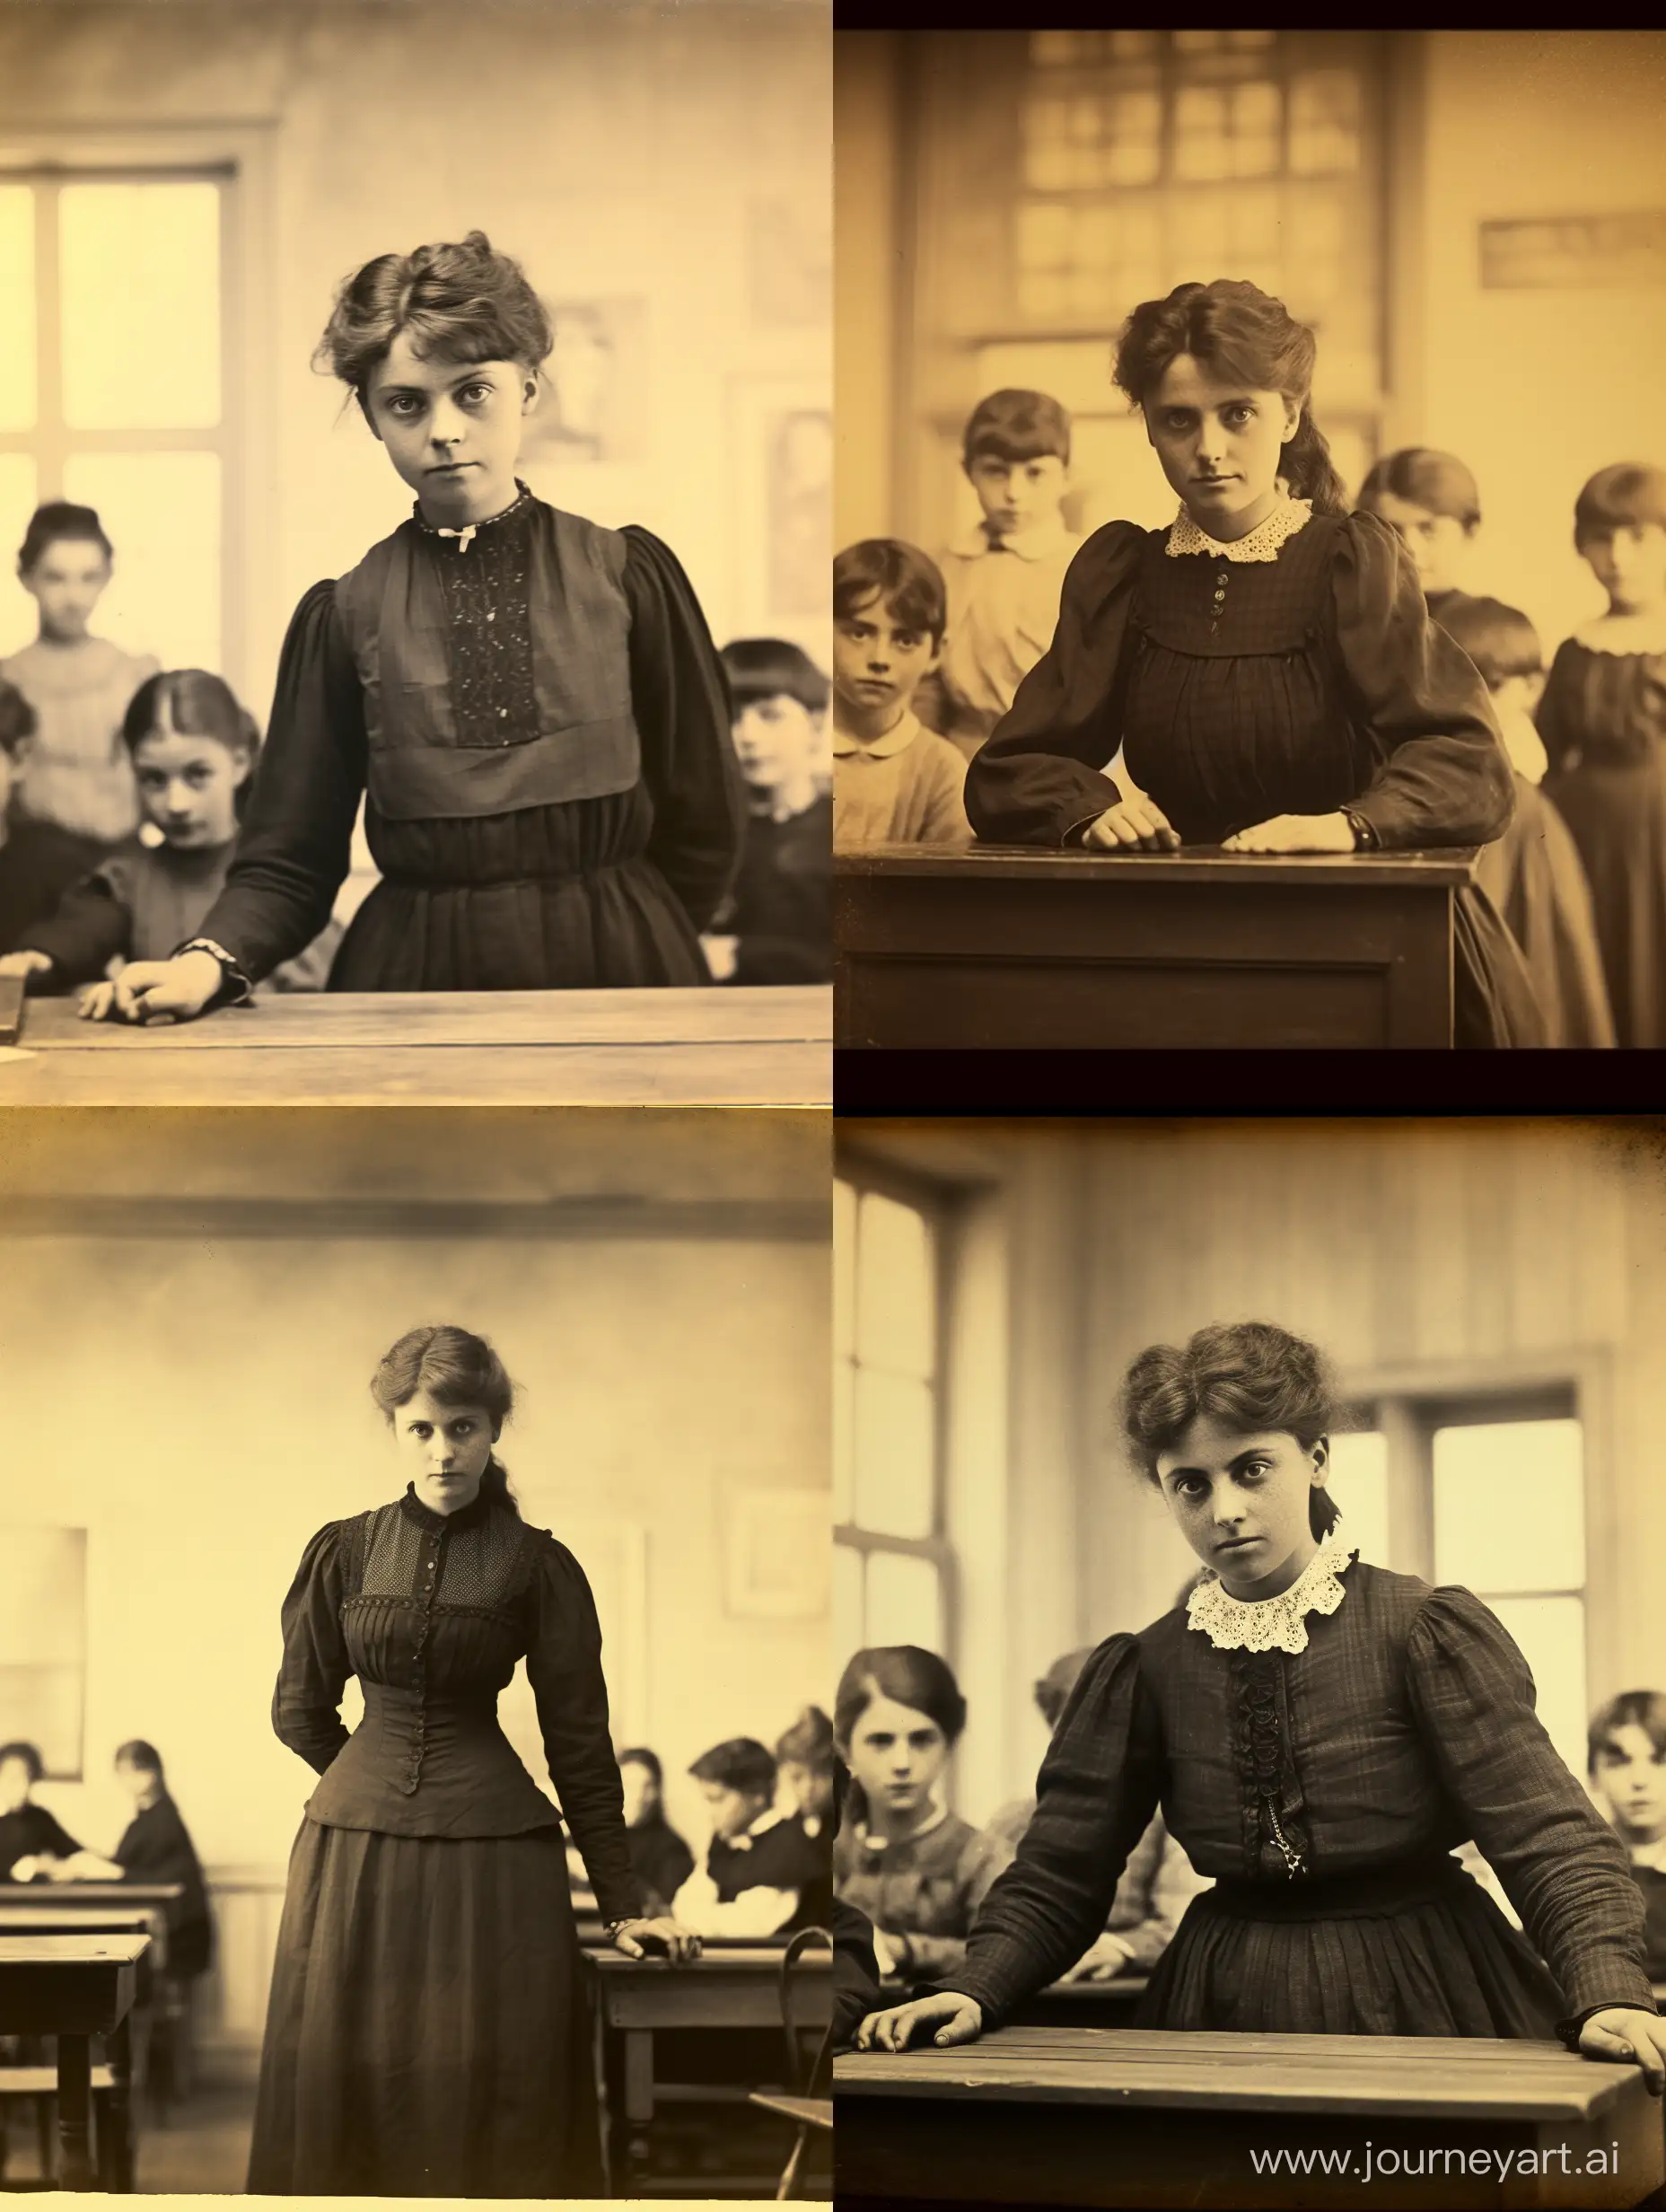 19th-Century-Irish-Teacher-in-Period-Costume-with-Students